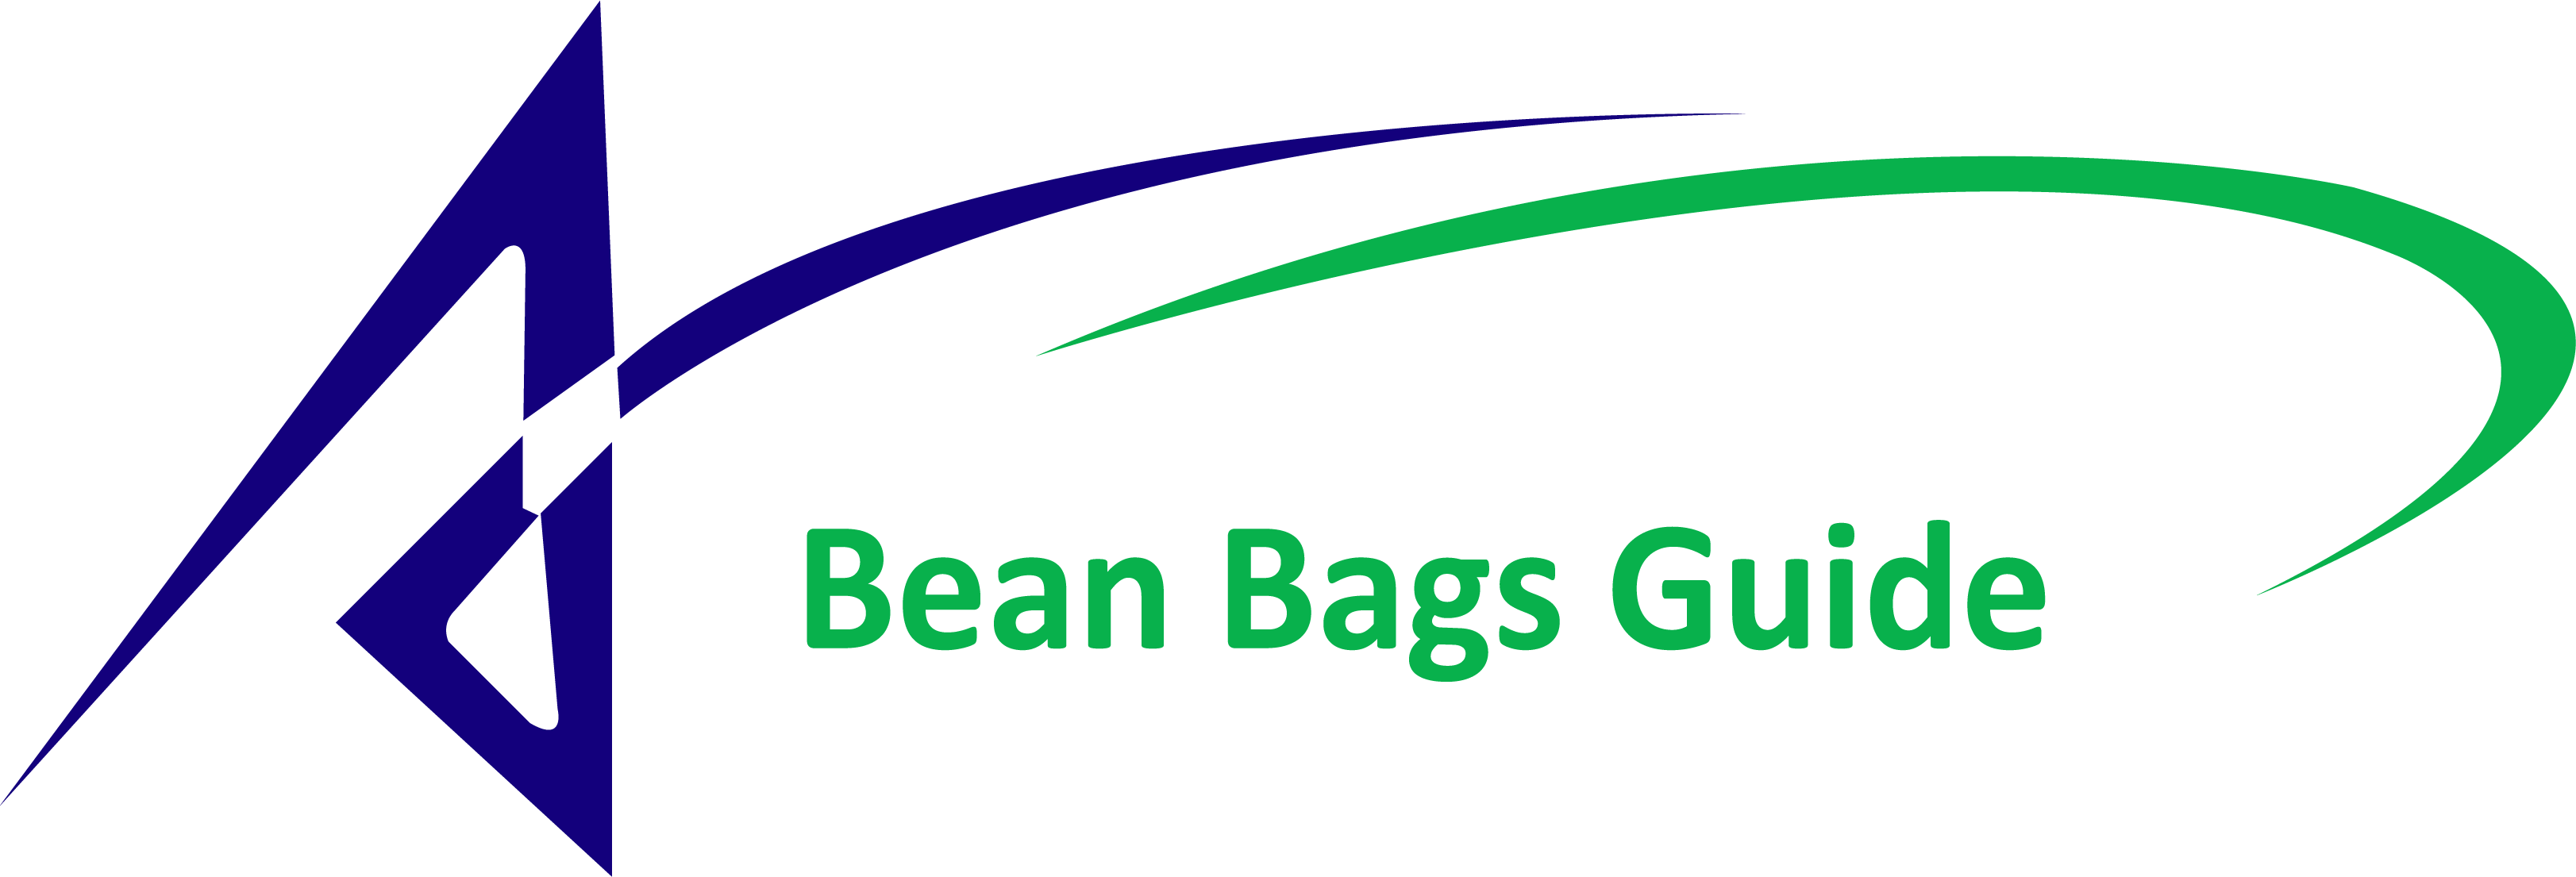 Bean bags Guide